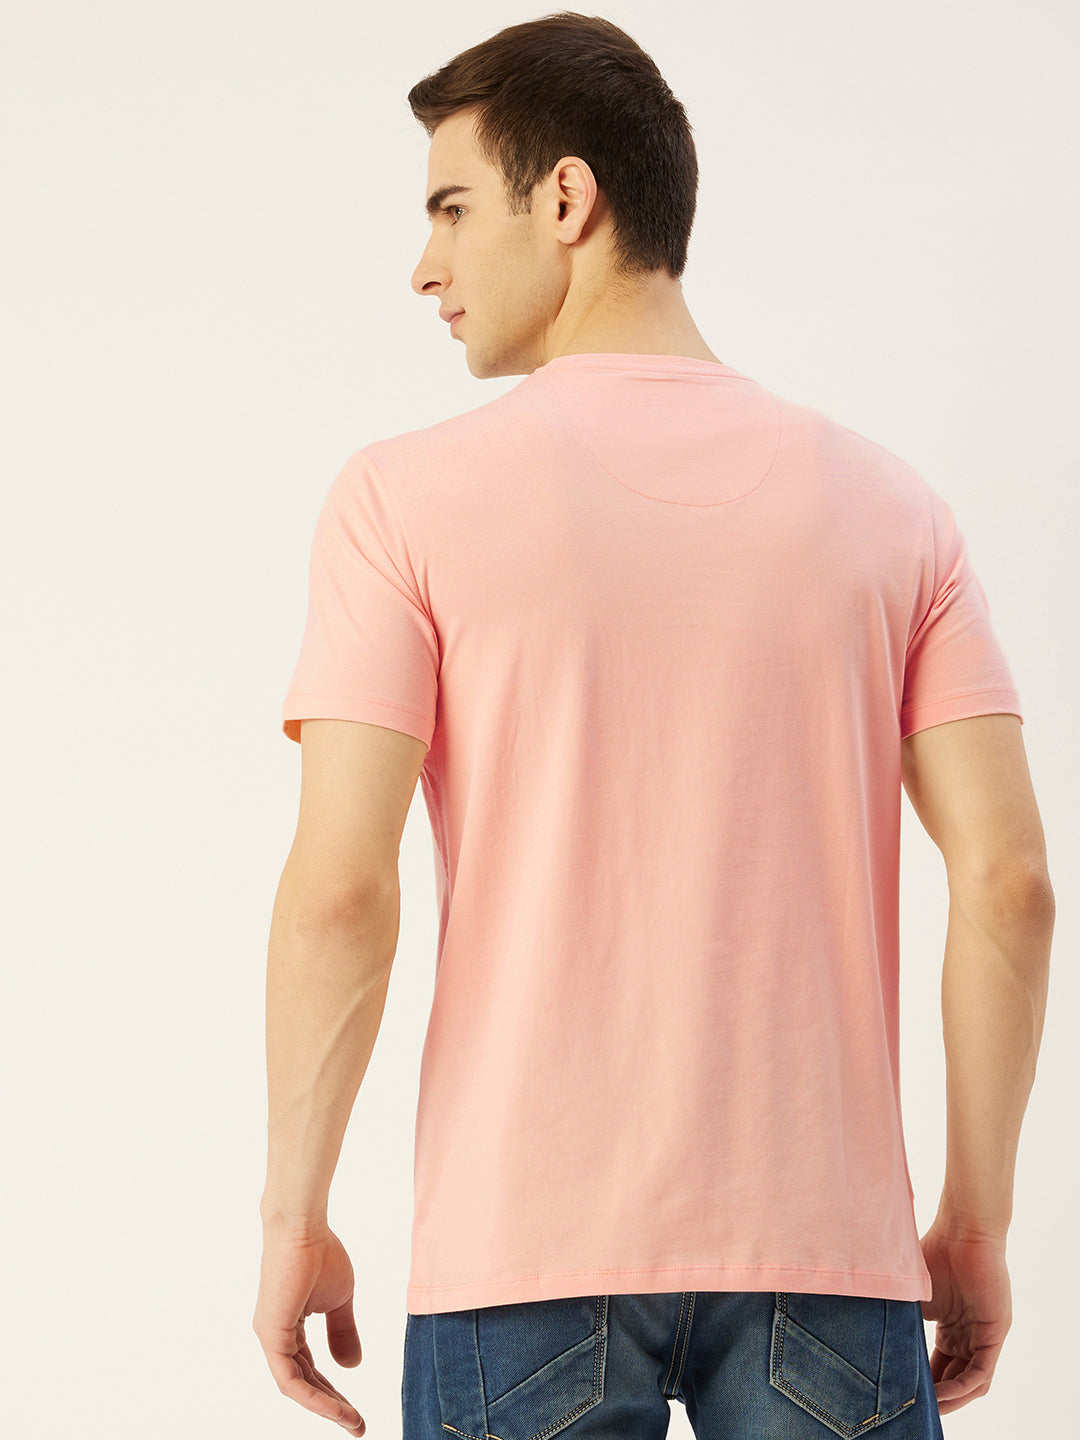 Men's Crew Neck Graphic T-Shirts with Half Sleeves in Premium Cotton Lycra